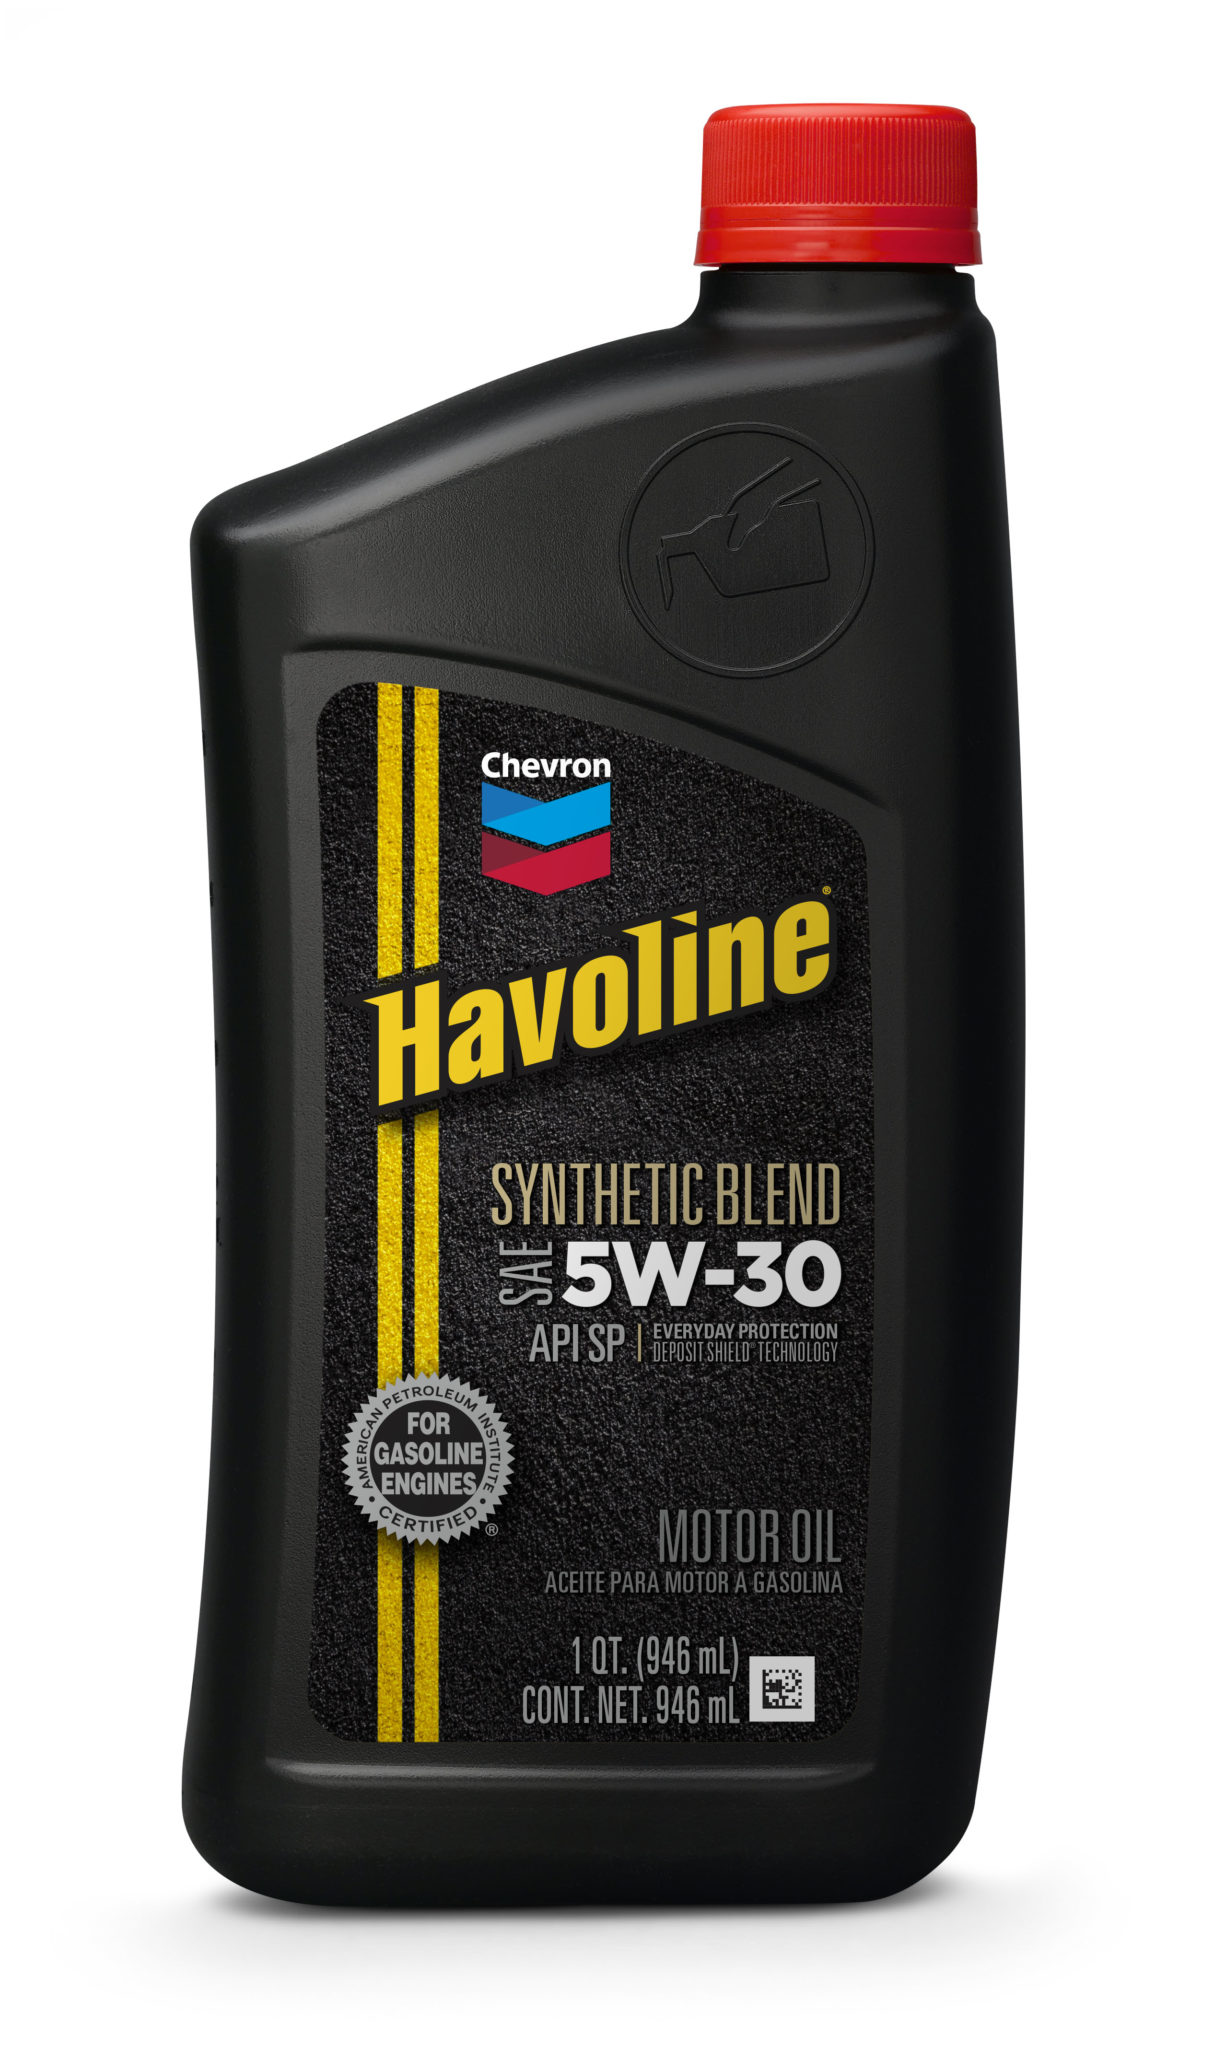 havoline-synthetic-blend-motor-oil-5w-30-santmyer-online-store